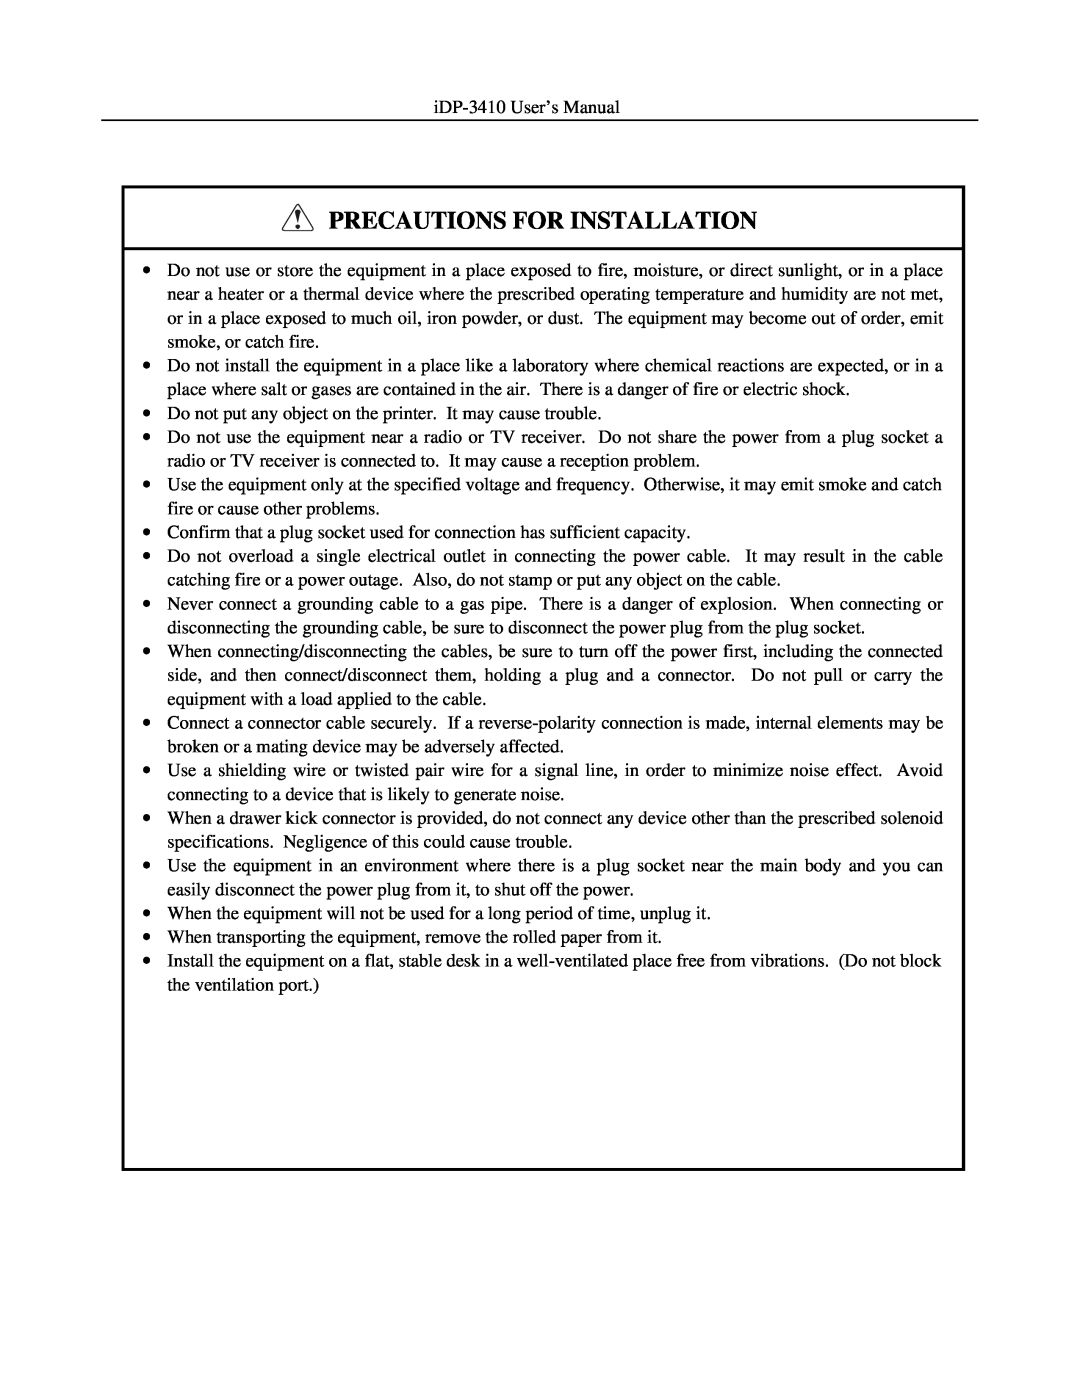 Addlogix iDP-3410 user manual Precautions For Installation 